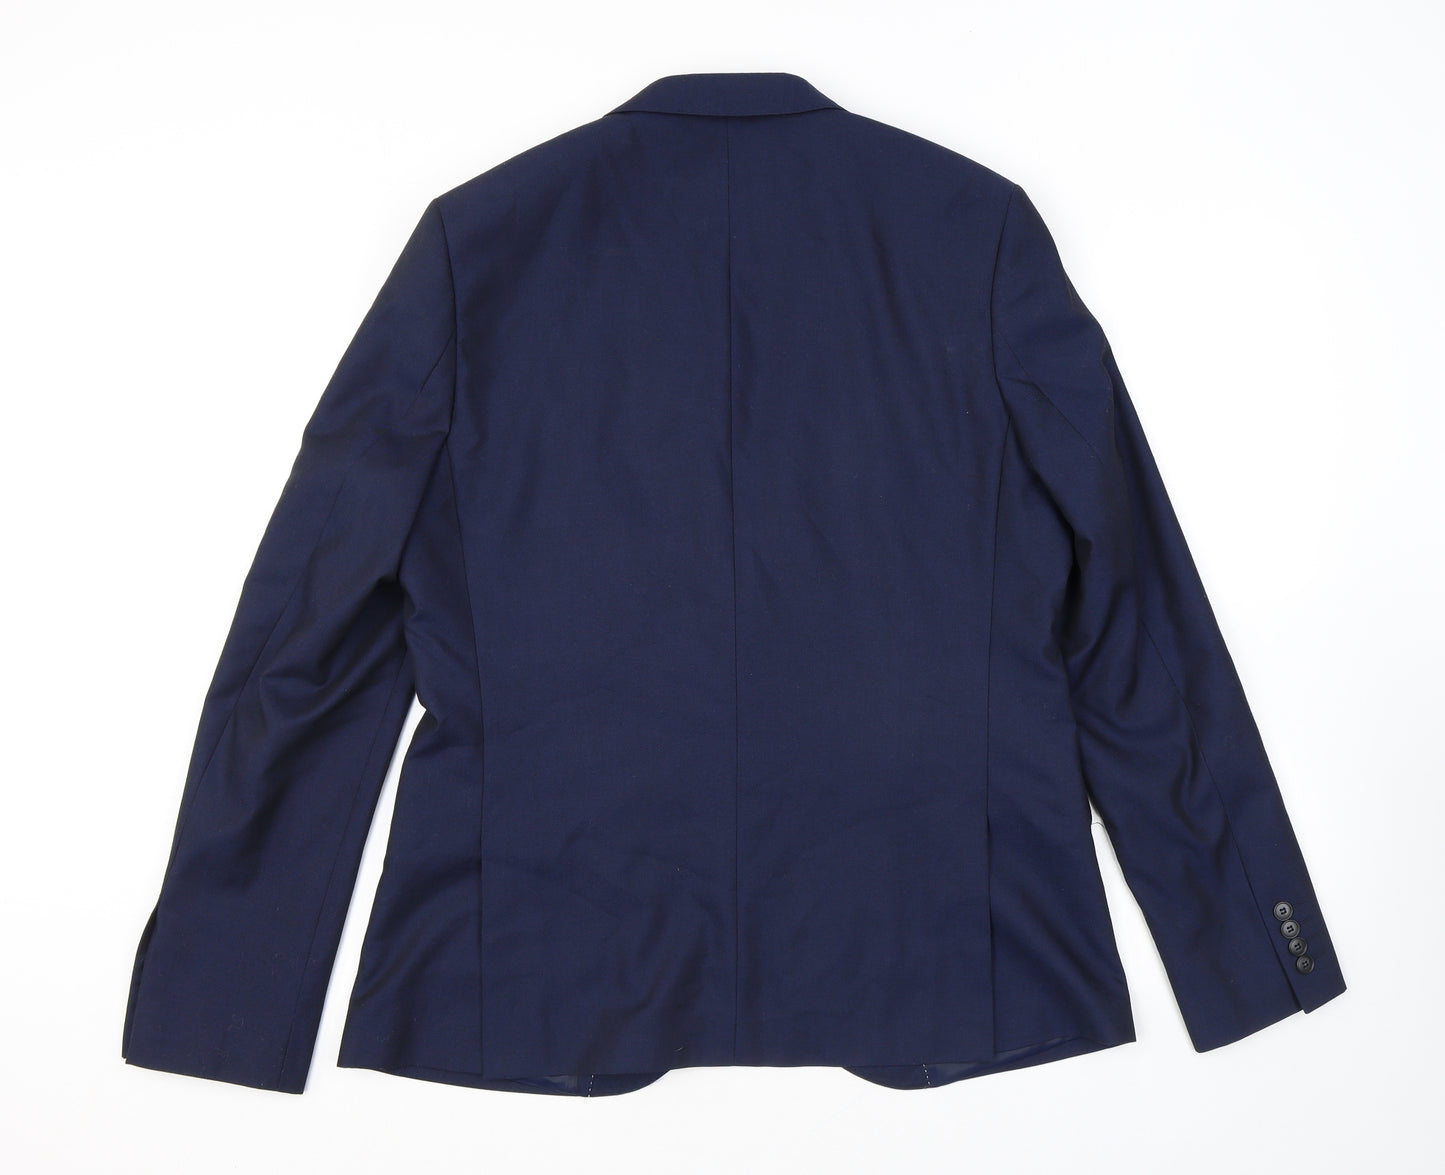 Topman Mens Blue Polyester Jacket Suit Jacket Size 42 Regular